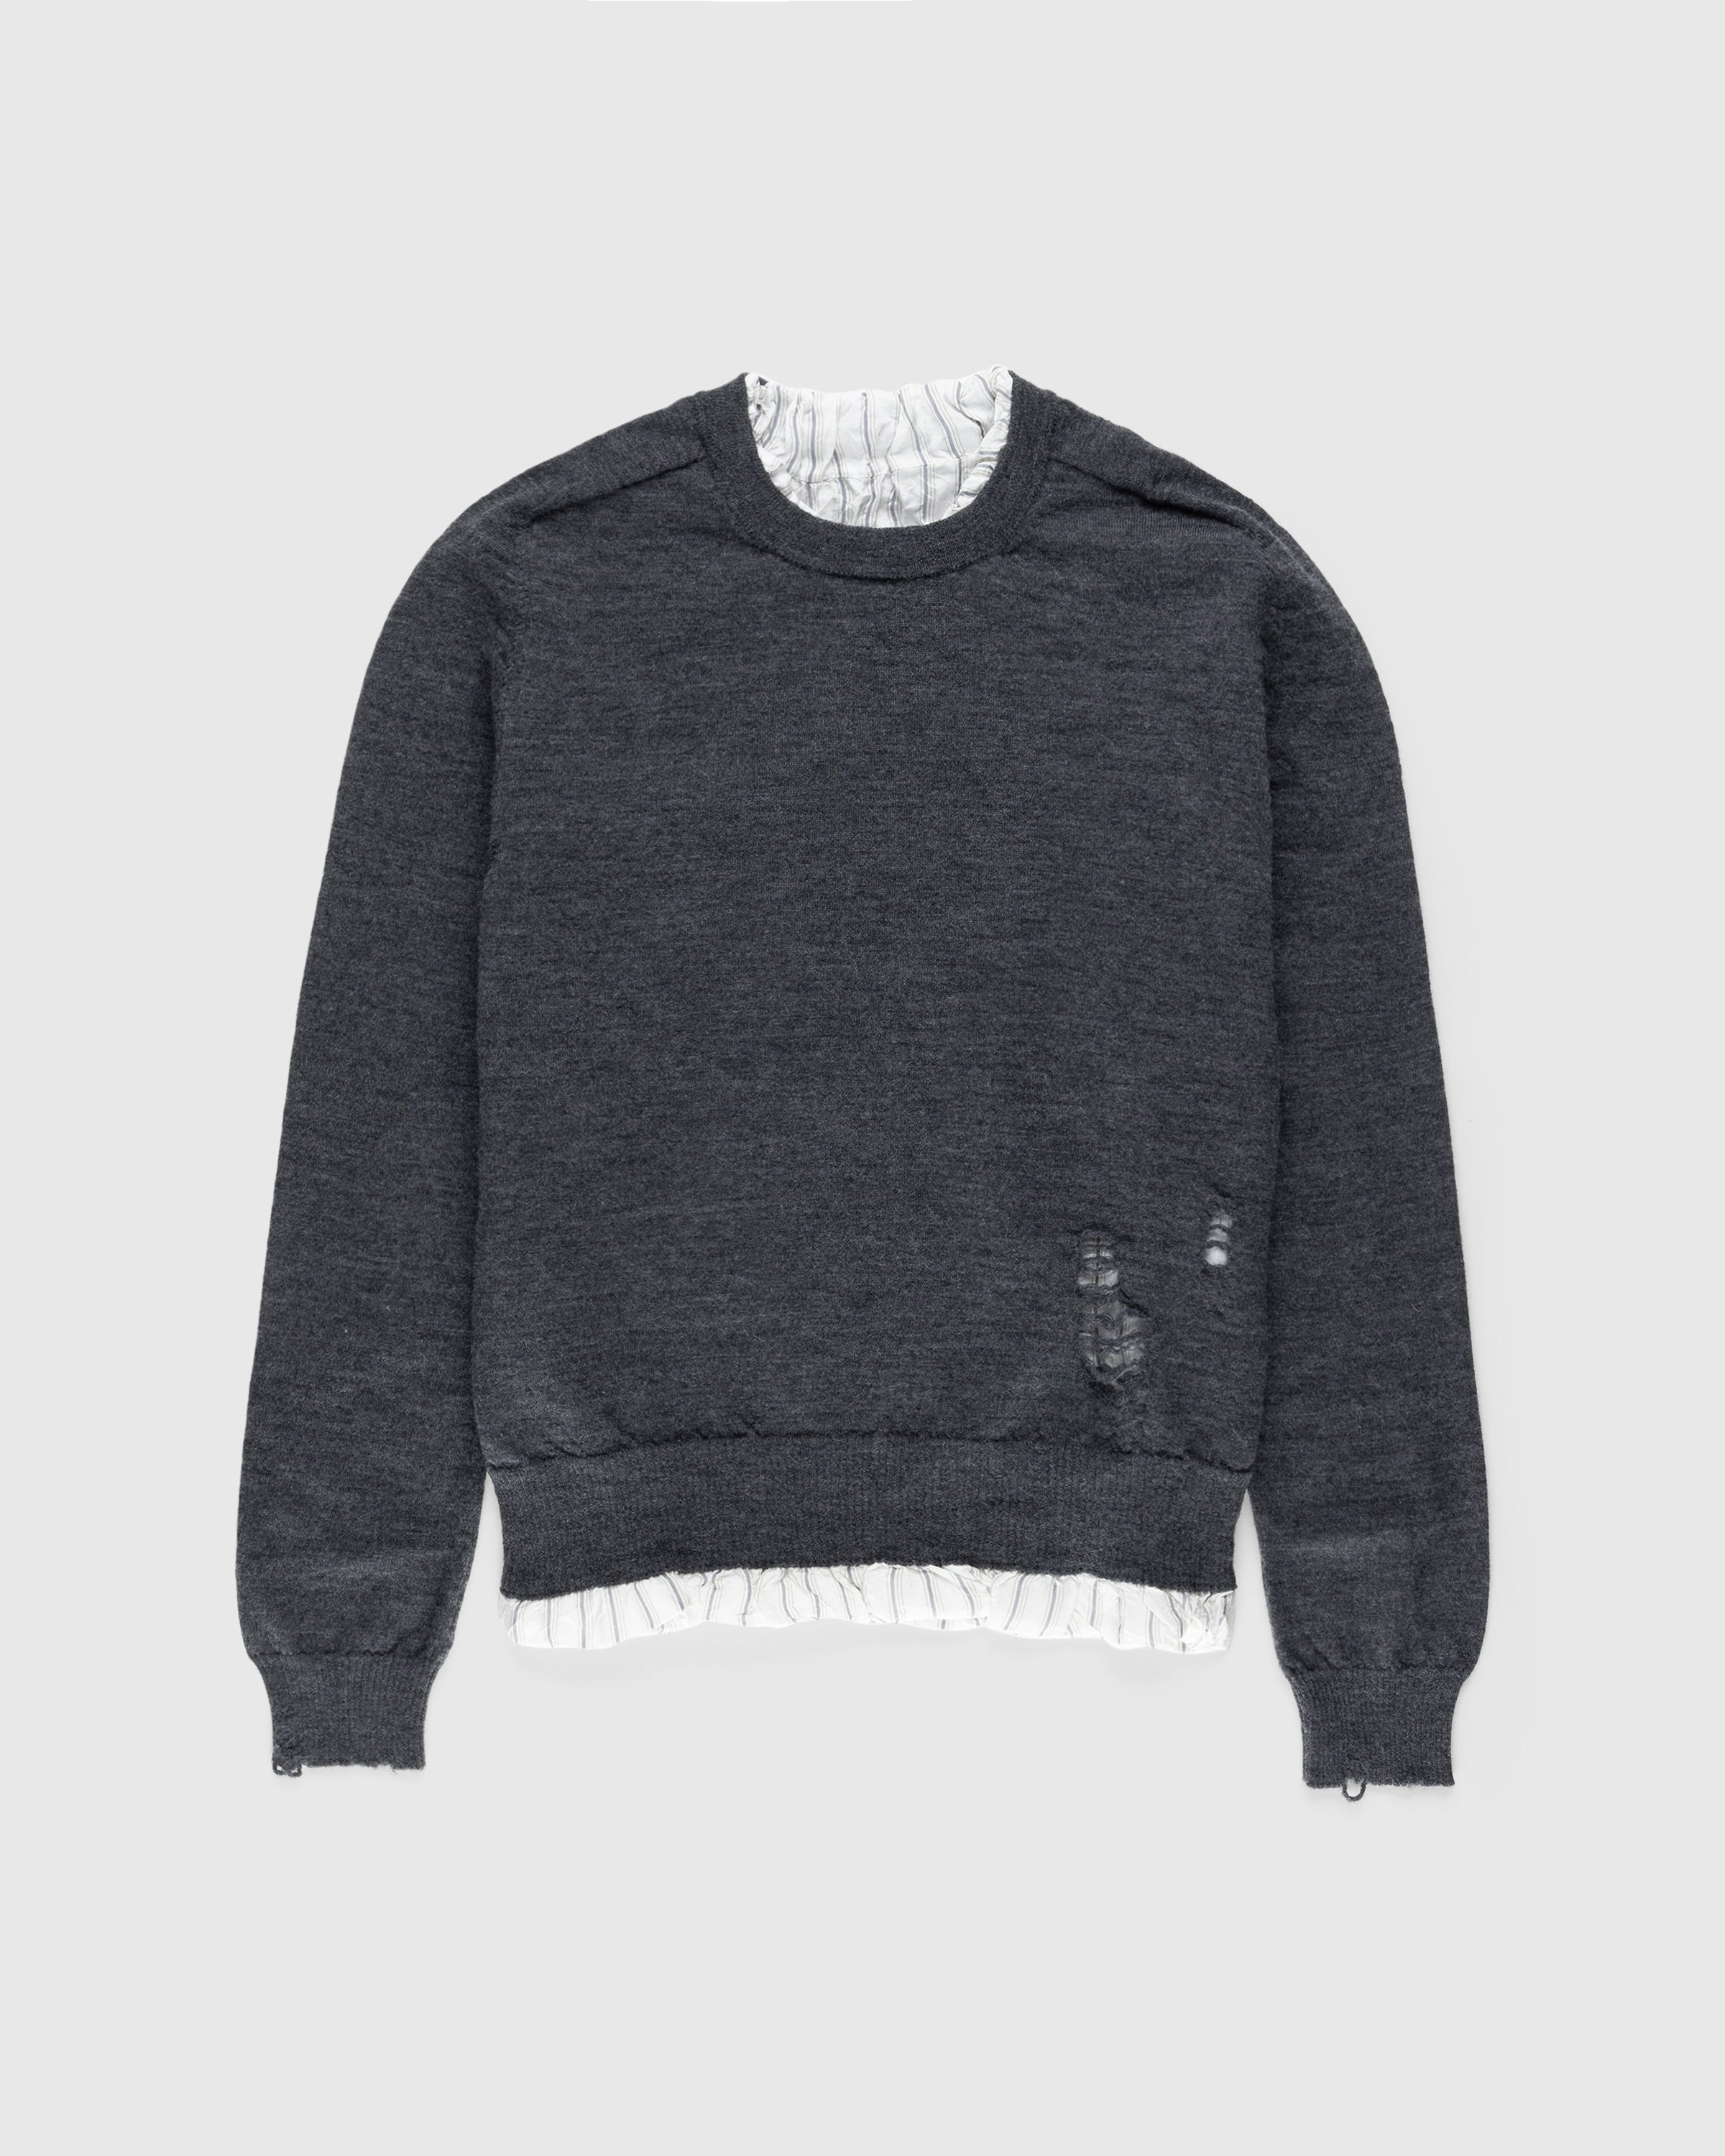 Maison Margiela – Distressed Crewneck Sweater Dark Grey - Knitwear - Grey - Image 1